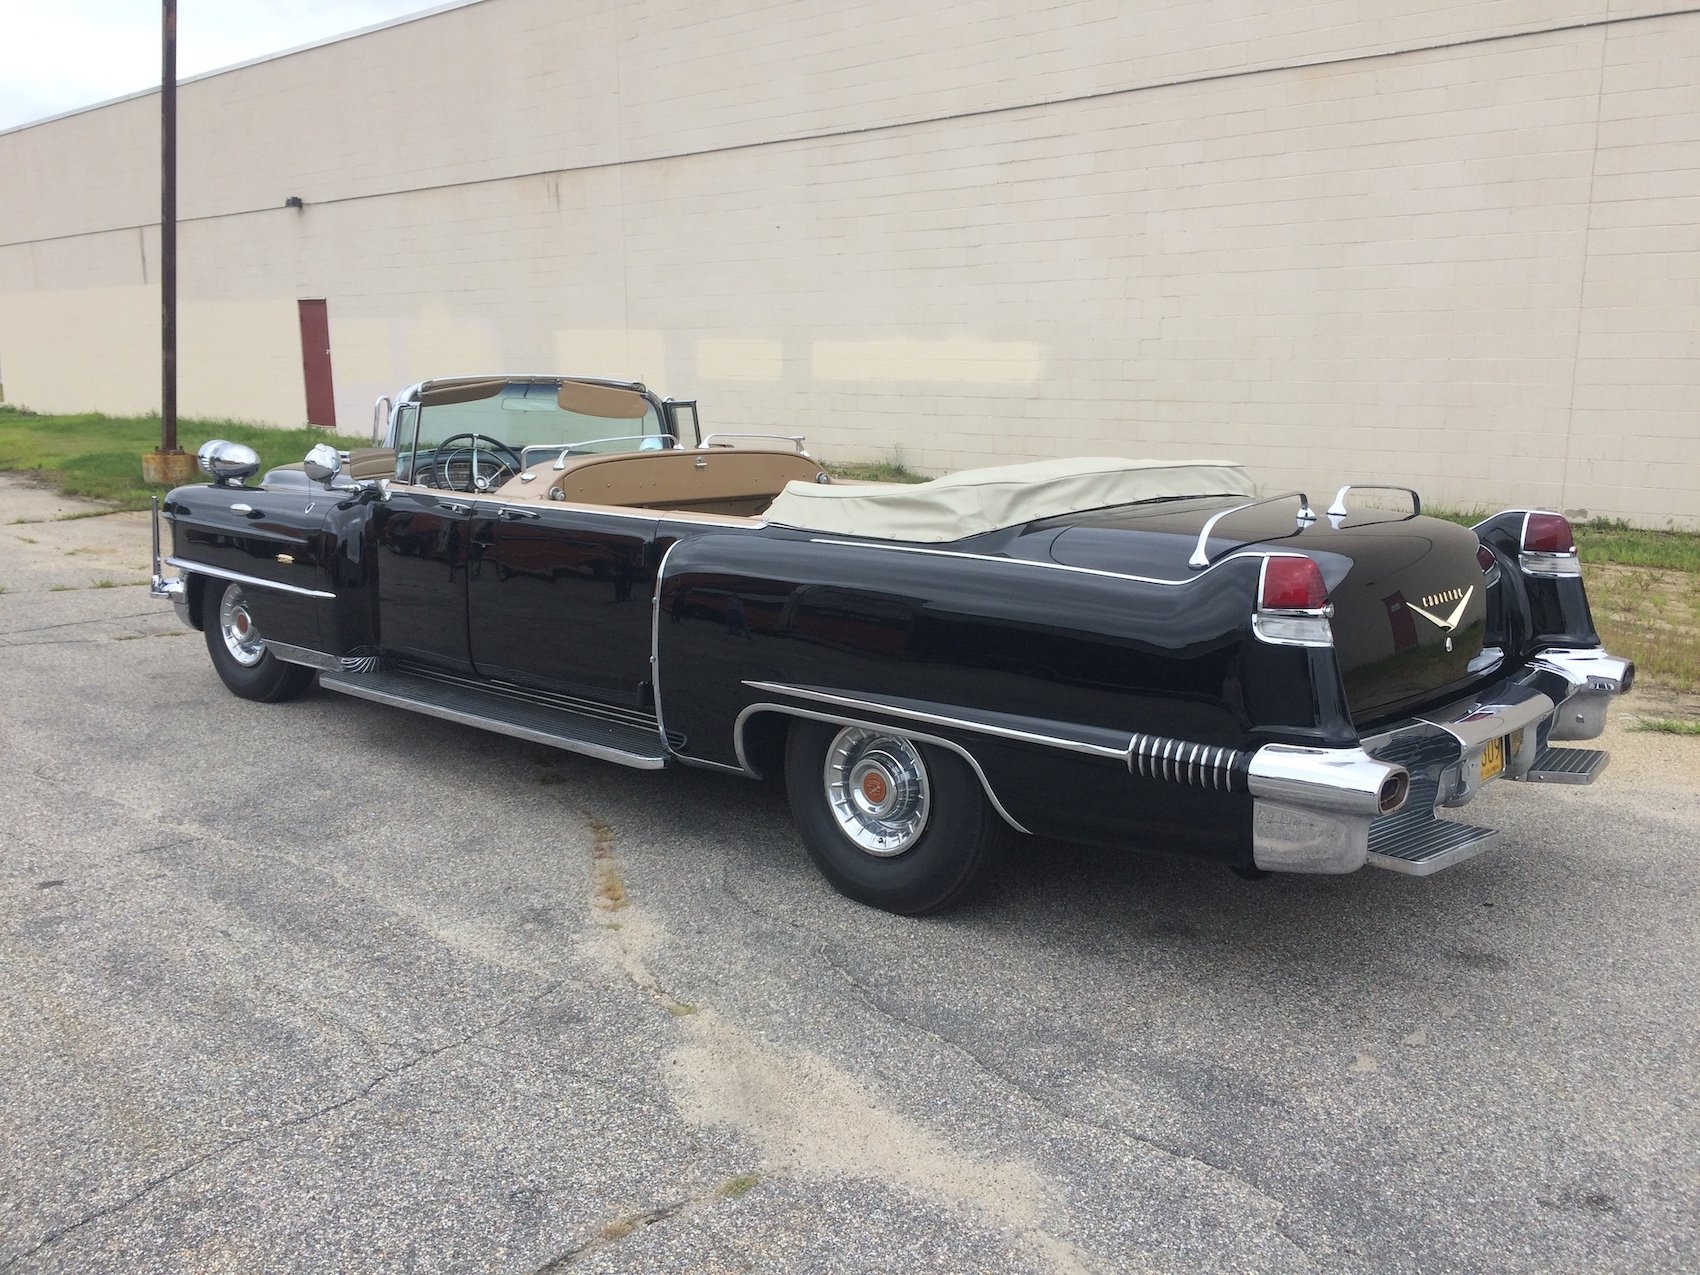  1956 Cadillac Presidential Parade Car 